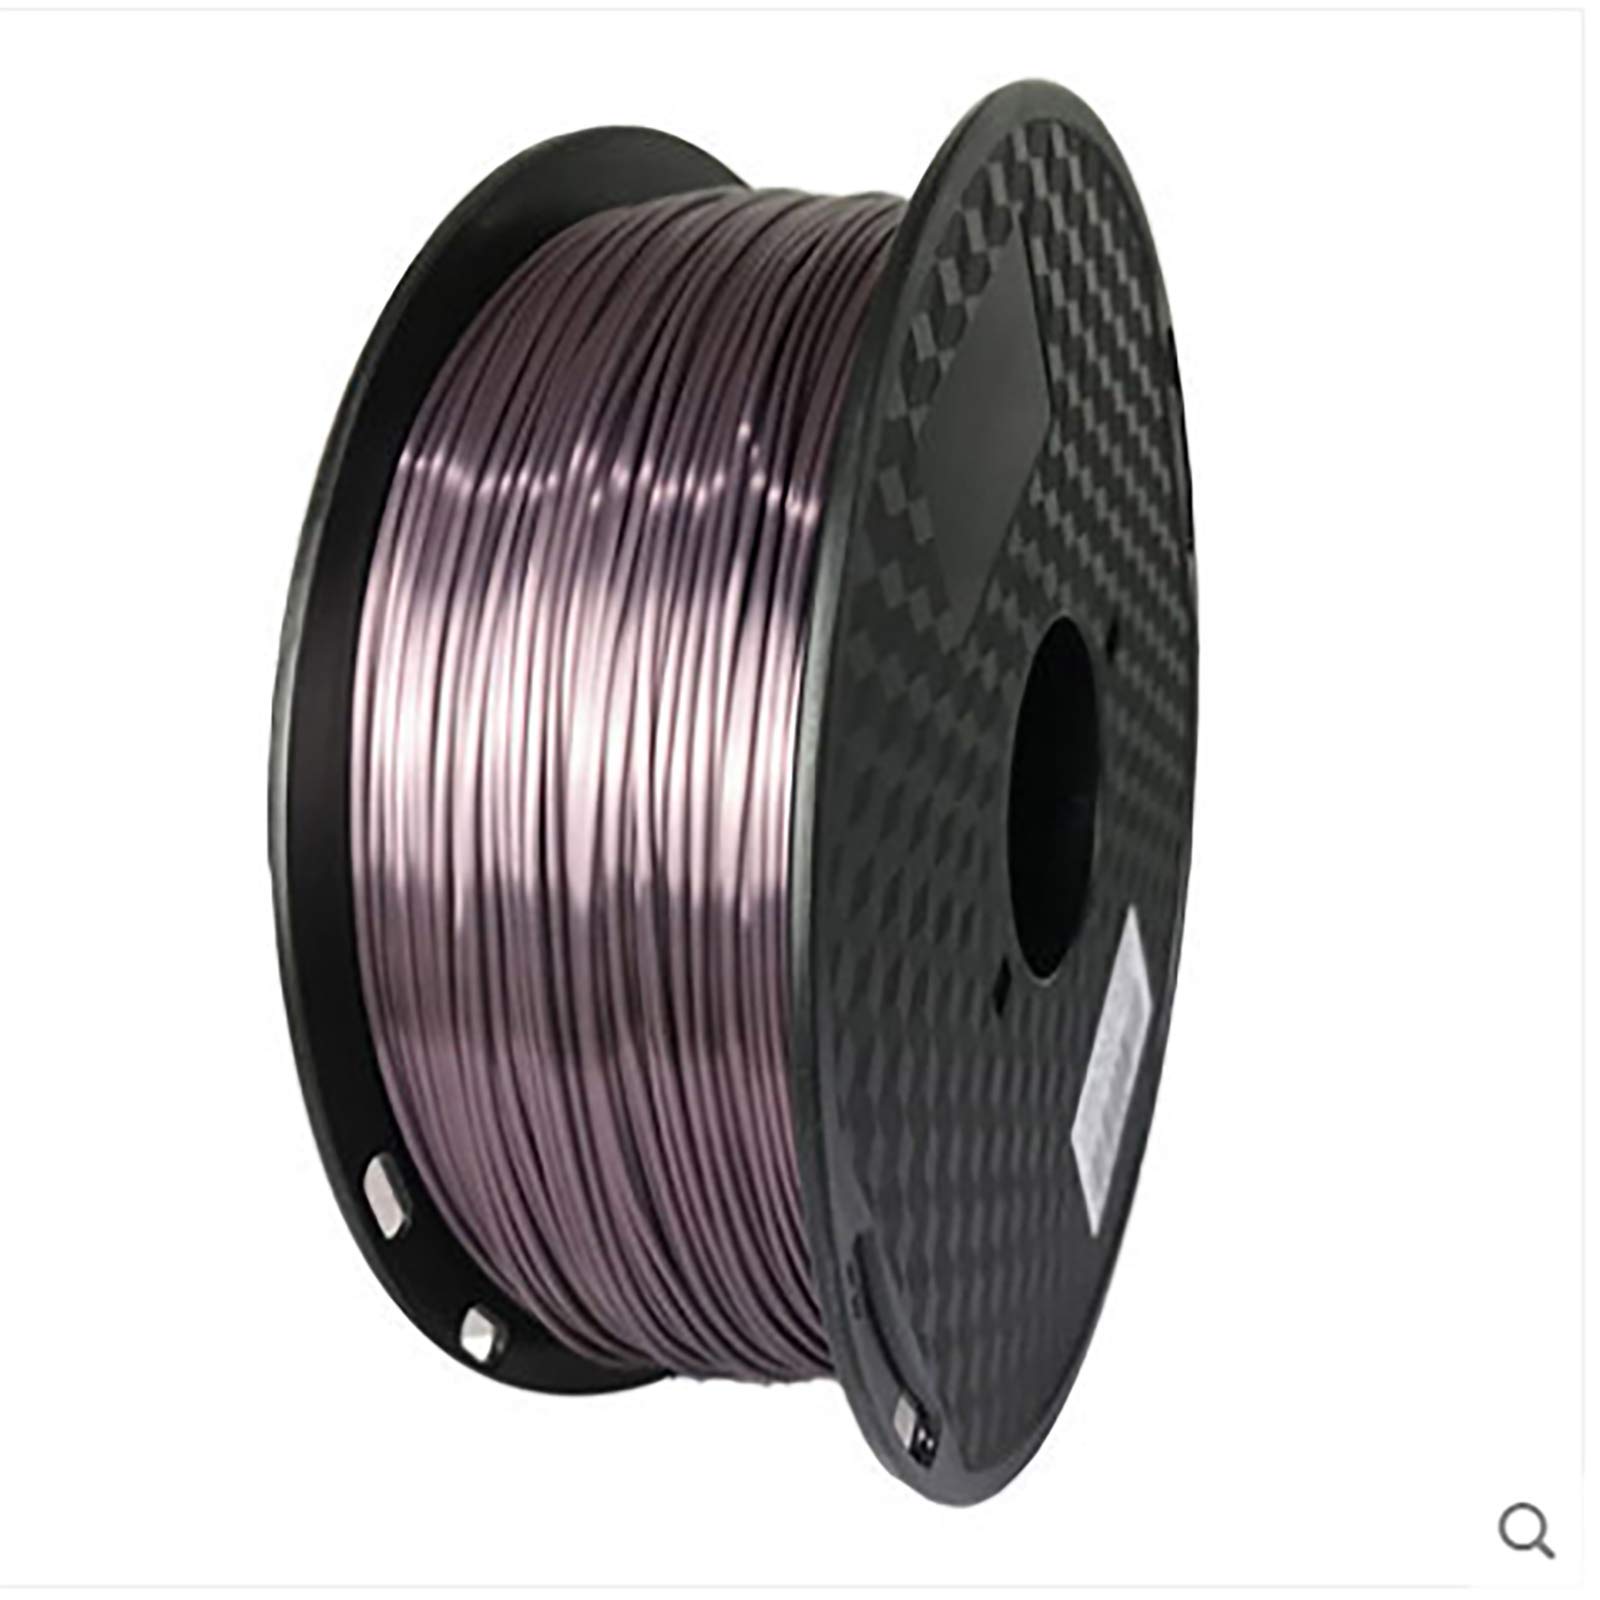 3D-Drucker Filament Pla Seide Material 1,75 2,85 Mm Grundlinie 3D-Druck Filament Für 3D-Drucker Und 3D-Stift Bronze(Color:lila)